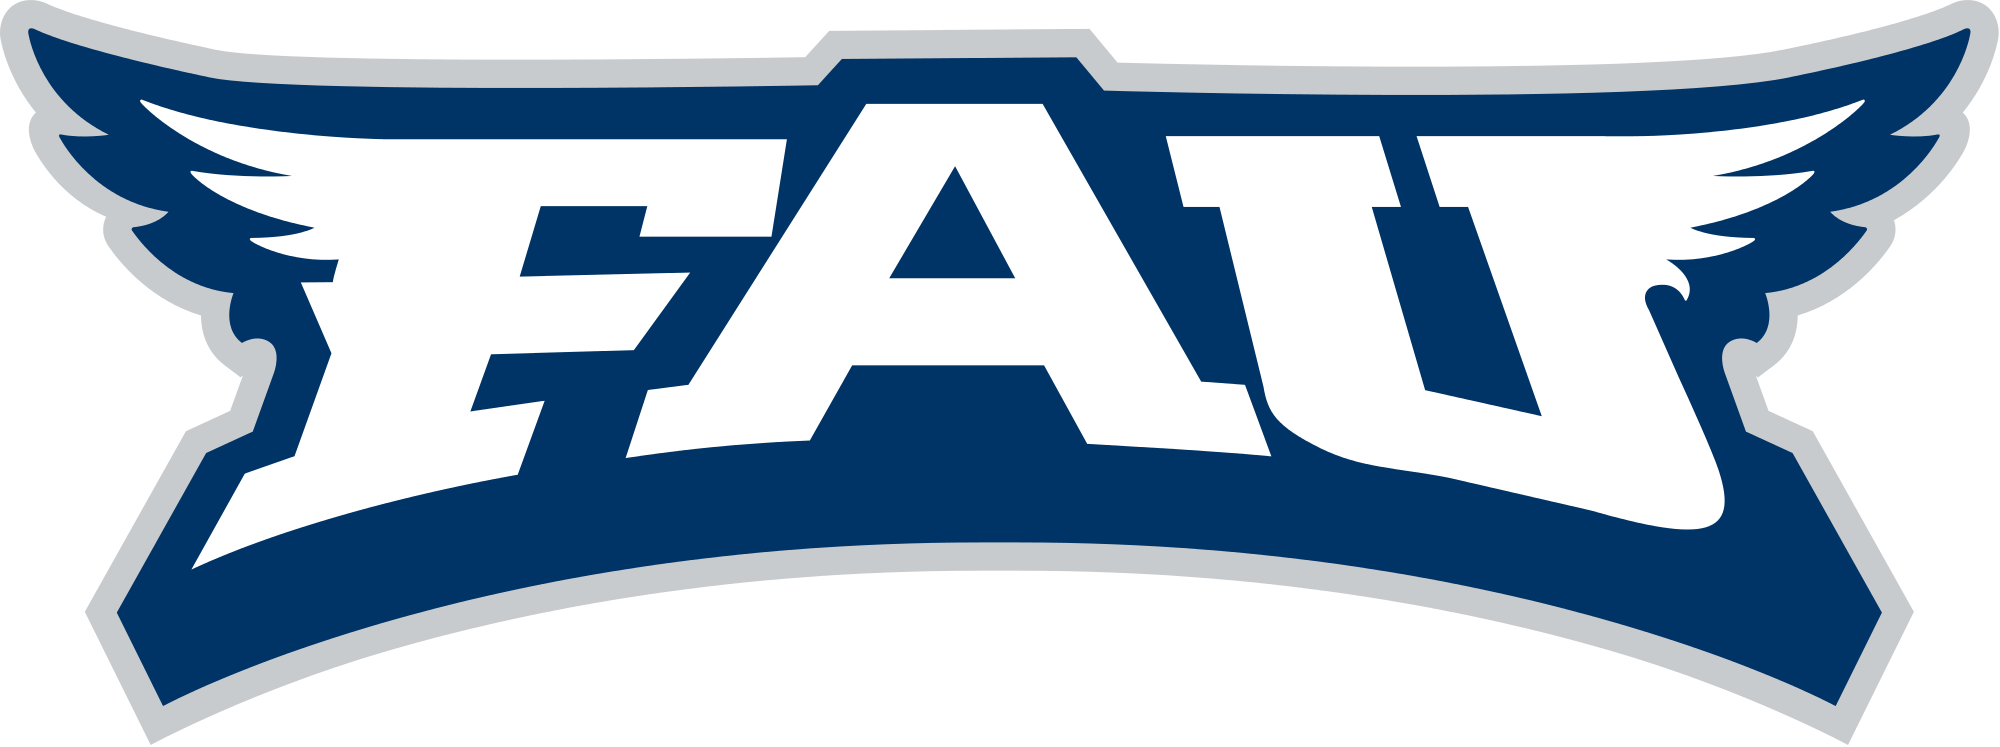 FAU Logo - File:Florida Atlantic University monogram logo.svg - Wikimedia Commons